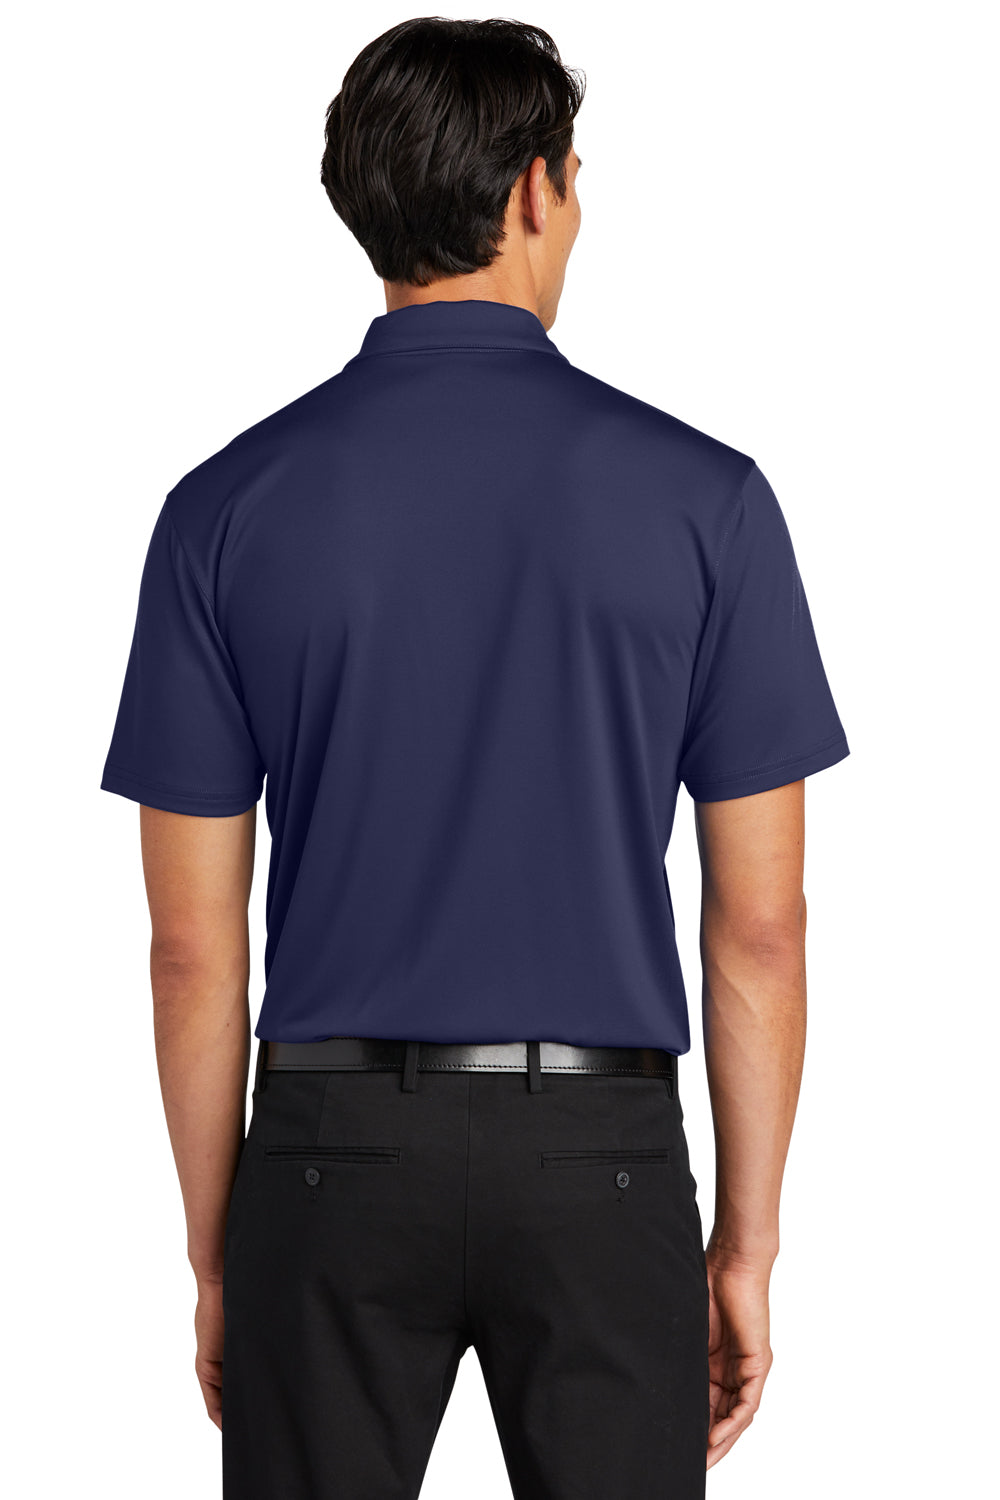 Port Authority K398 Staff Performance Short Sleeve Polo Shirt True Navy Blue Back